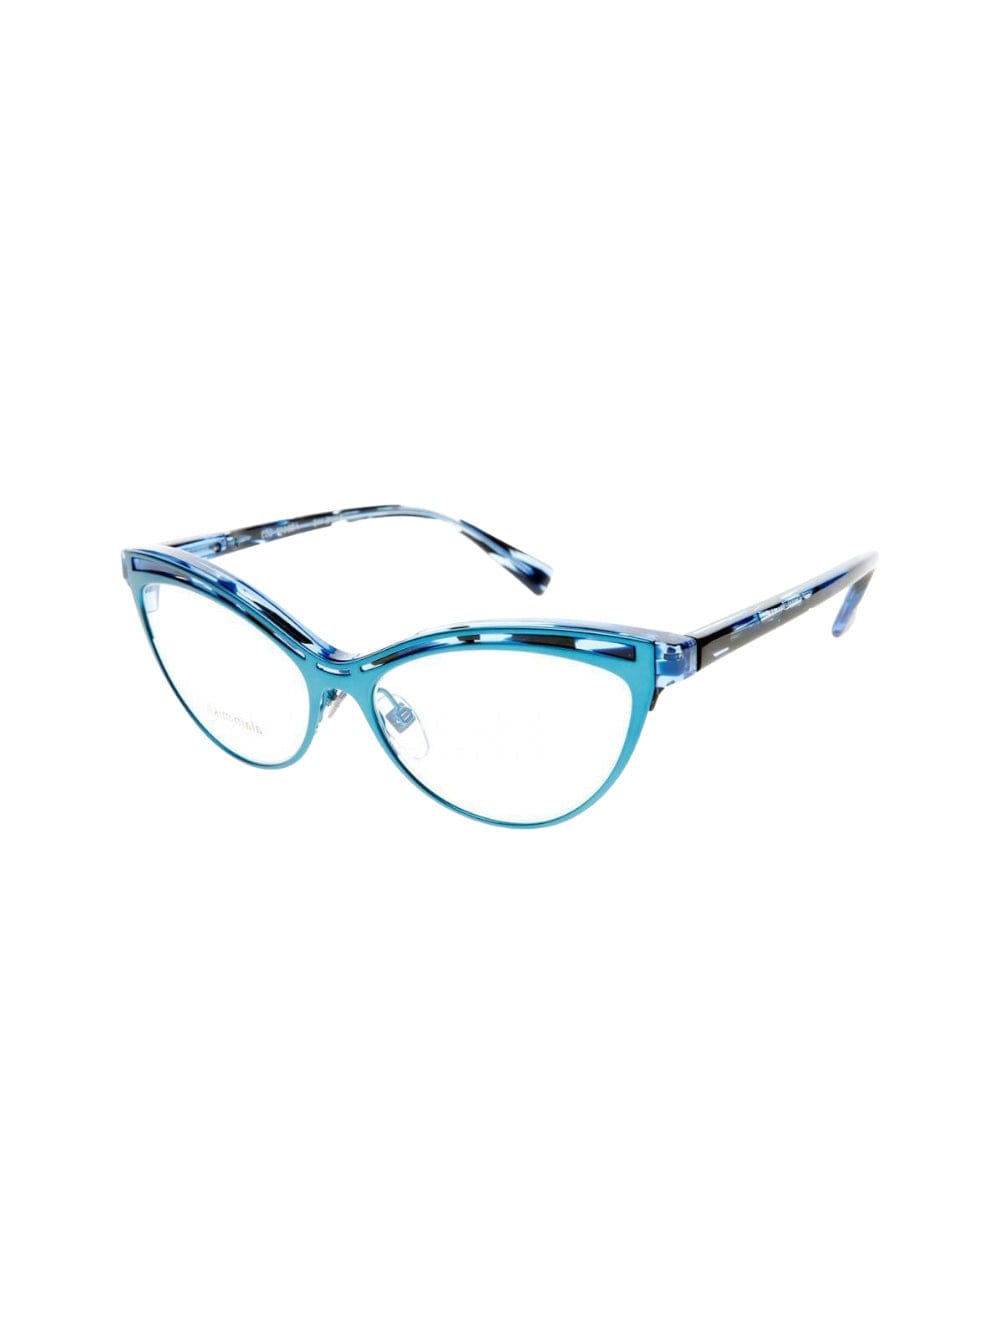 Alain Mikli A03072 - Blue 003 Glasses